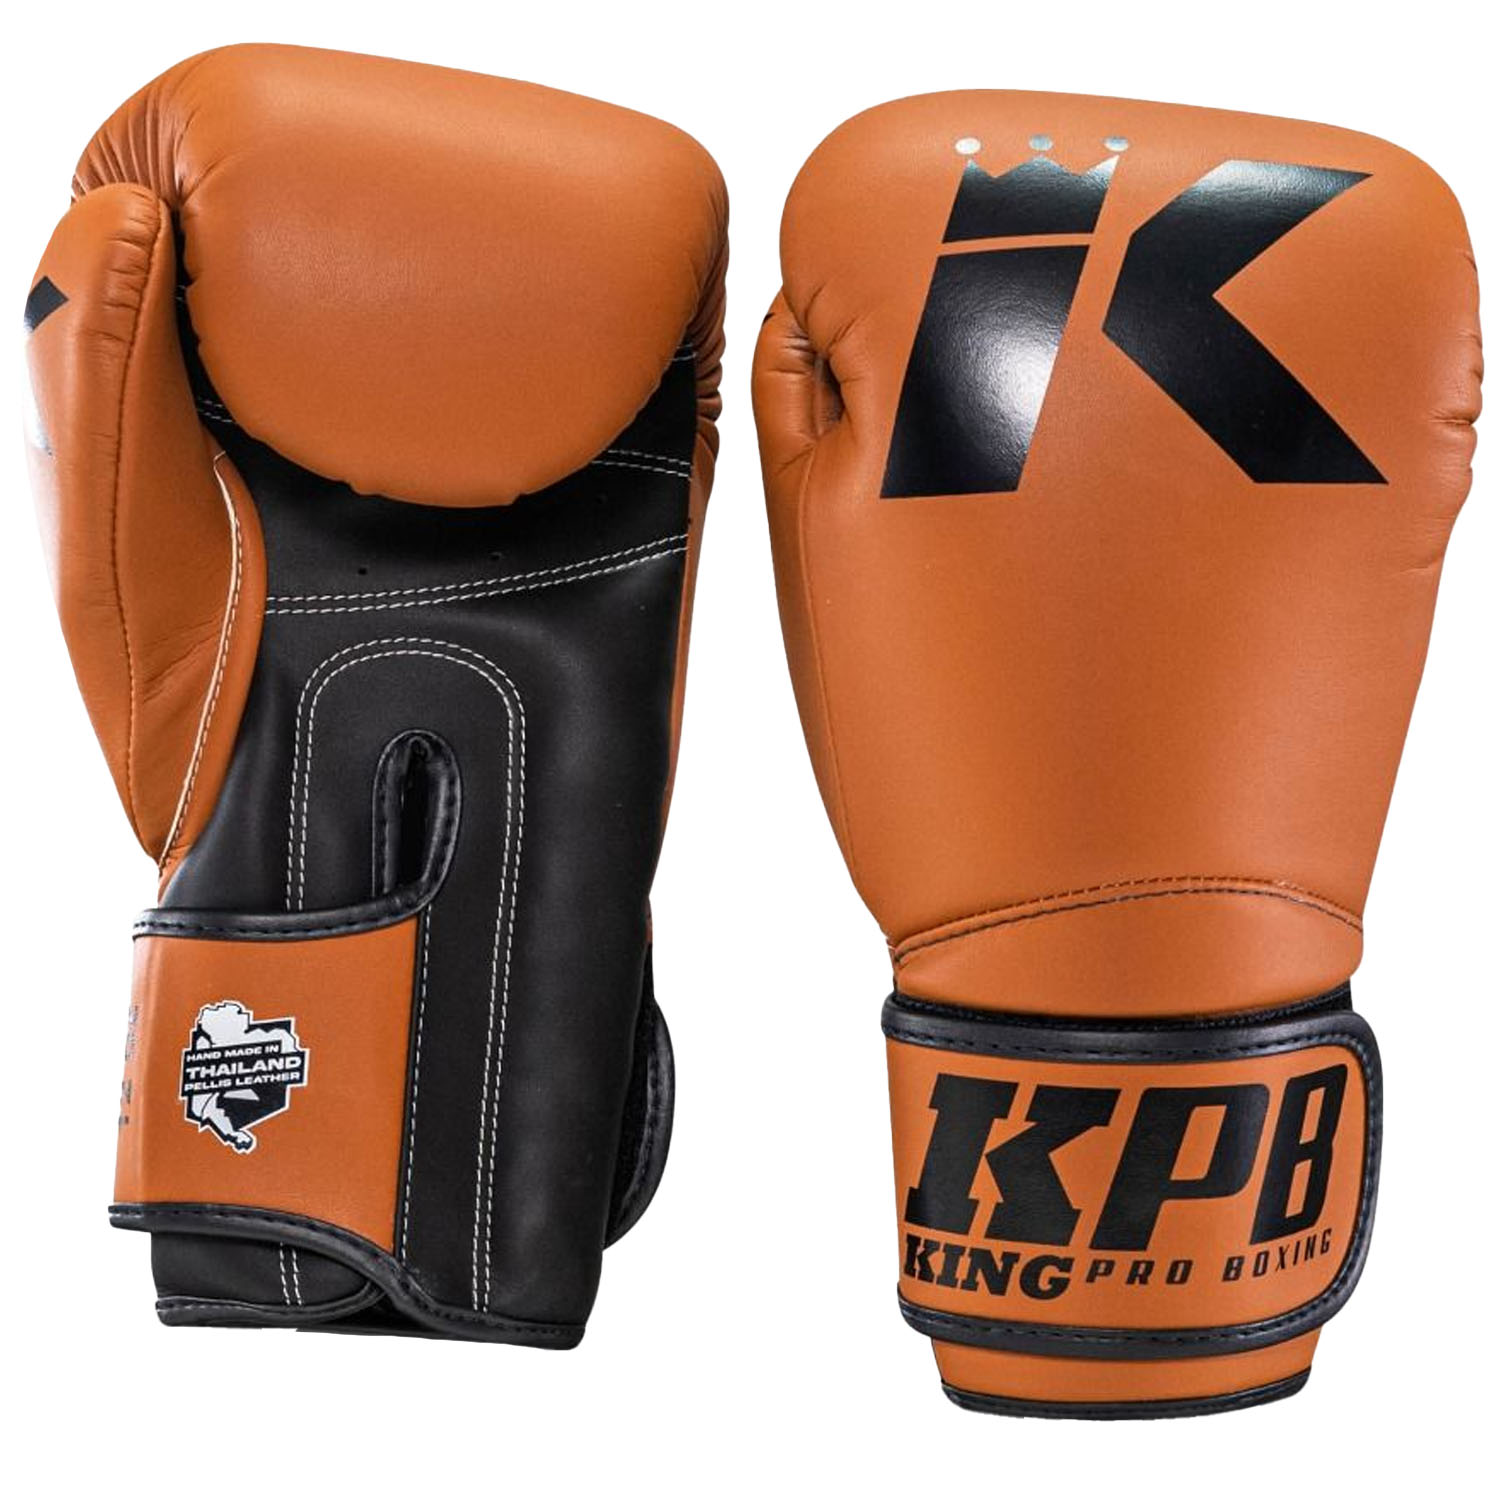 KING PRO BOXING Boxing Gloves, BGK 3, orange, 14 Oz